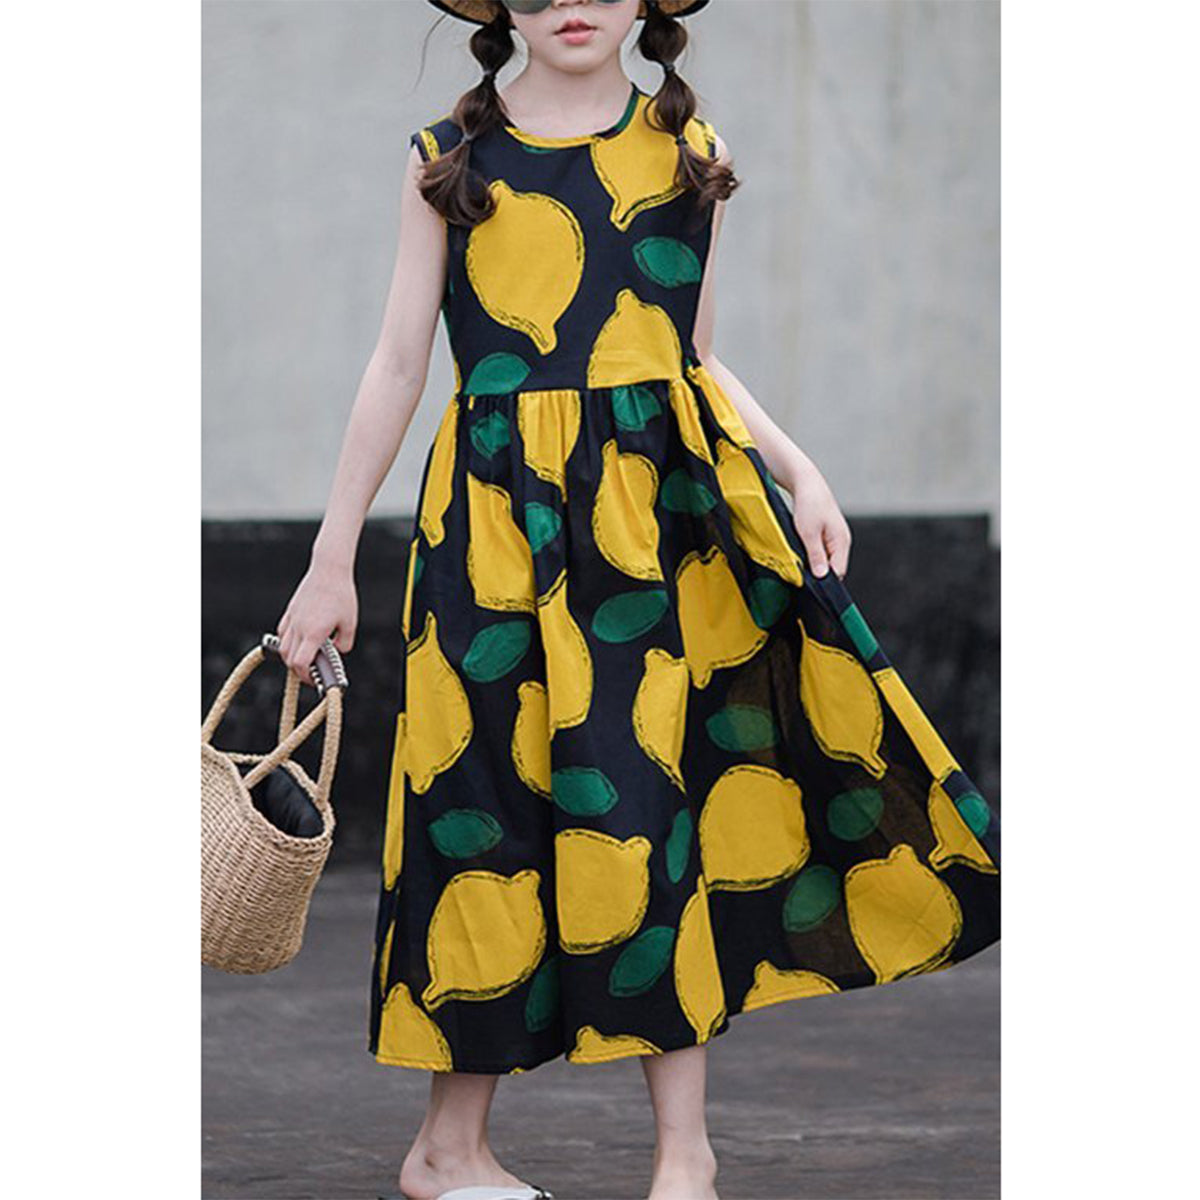 BabyGirl's Stylish Yellow Lemon & Black Lemon Tunic Dresses_Frocks Combo for Kids.